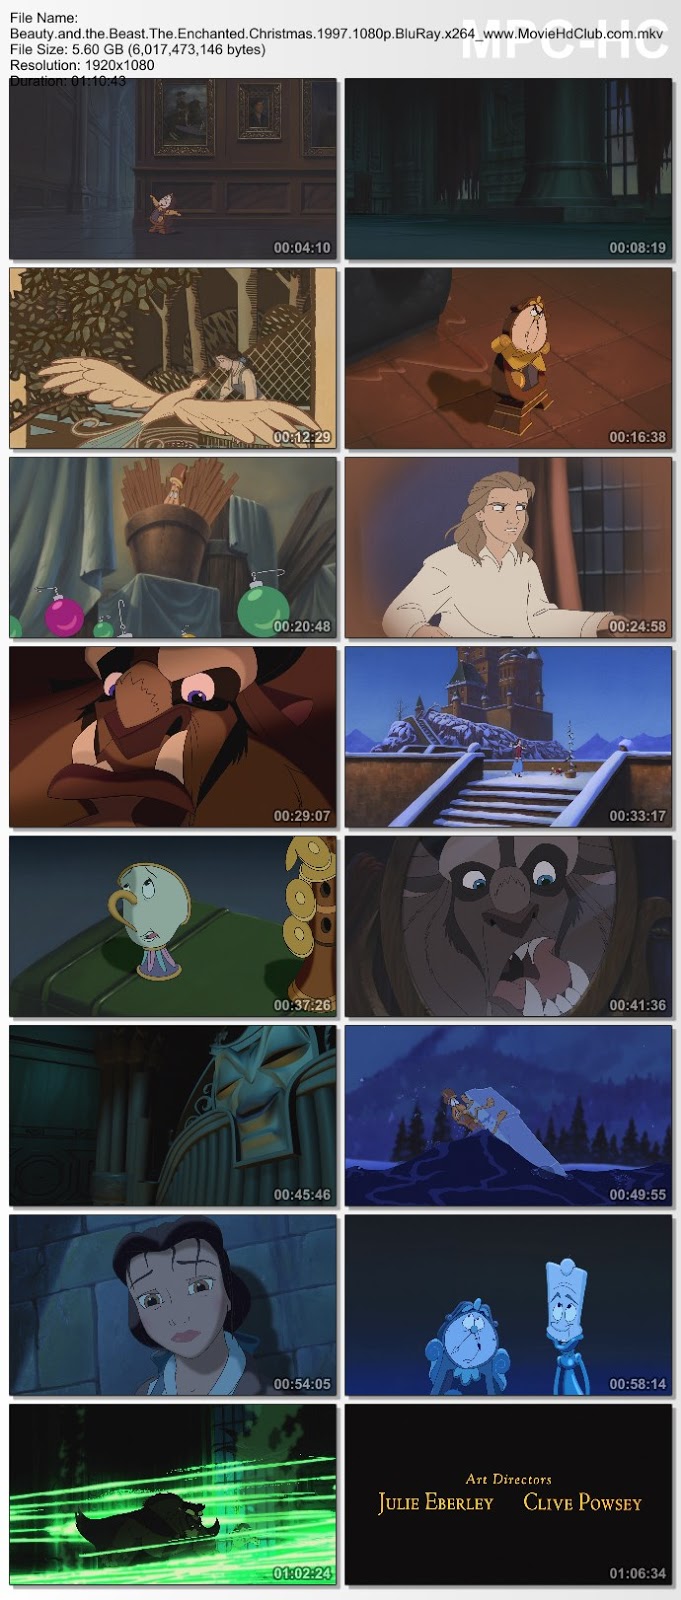 [Mini-HD][Boxset] Beauty and the Beast Collection (1991-1997) - โฉมงามกับเจ้าชายอสูร ภาค 1-2 [1080p][เสียง:ไทย 5.1/Eng 5.1][ซับ:ไทย/Eng][.MKV] BB2_MovieHdClub_SS